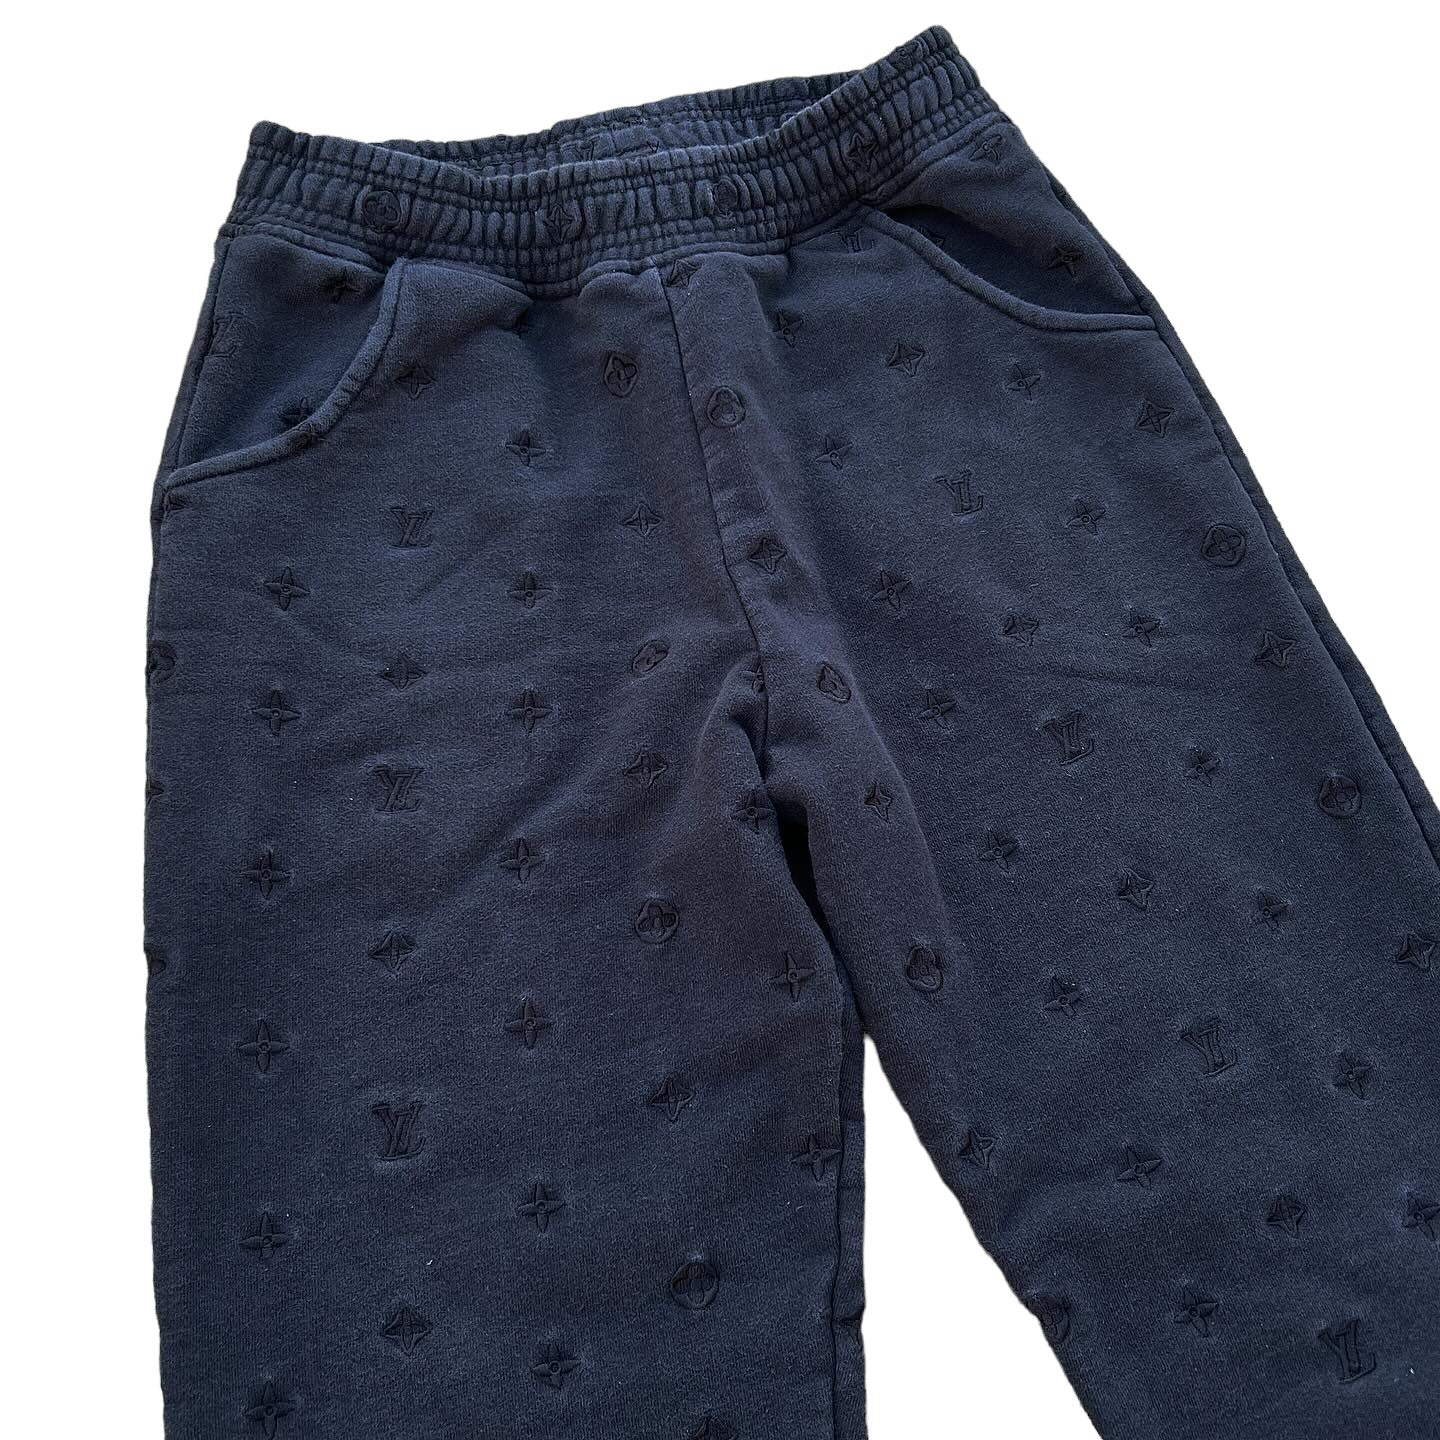 Black embroidered sweatpants